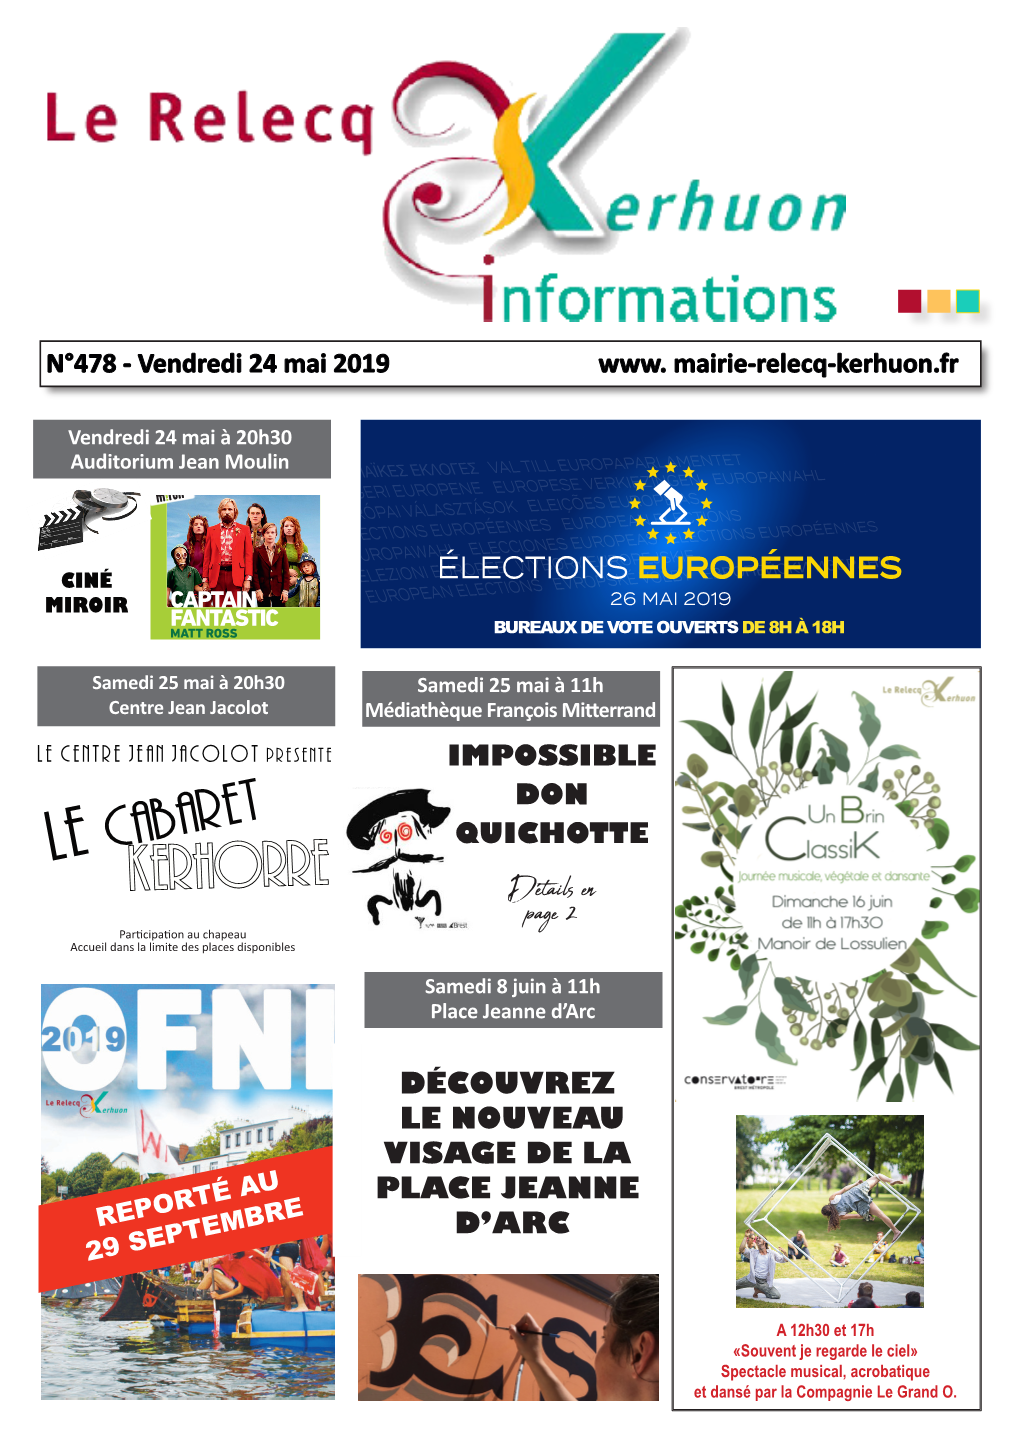 Le Relecq-Kerhuon Informations Du 24 Mai 2019